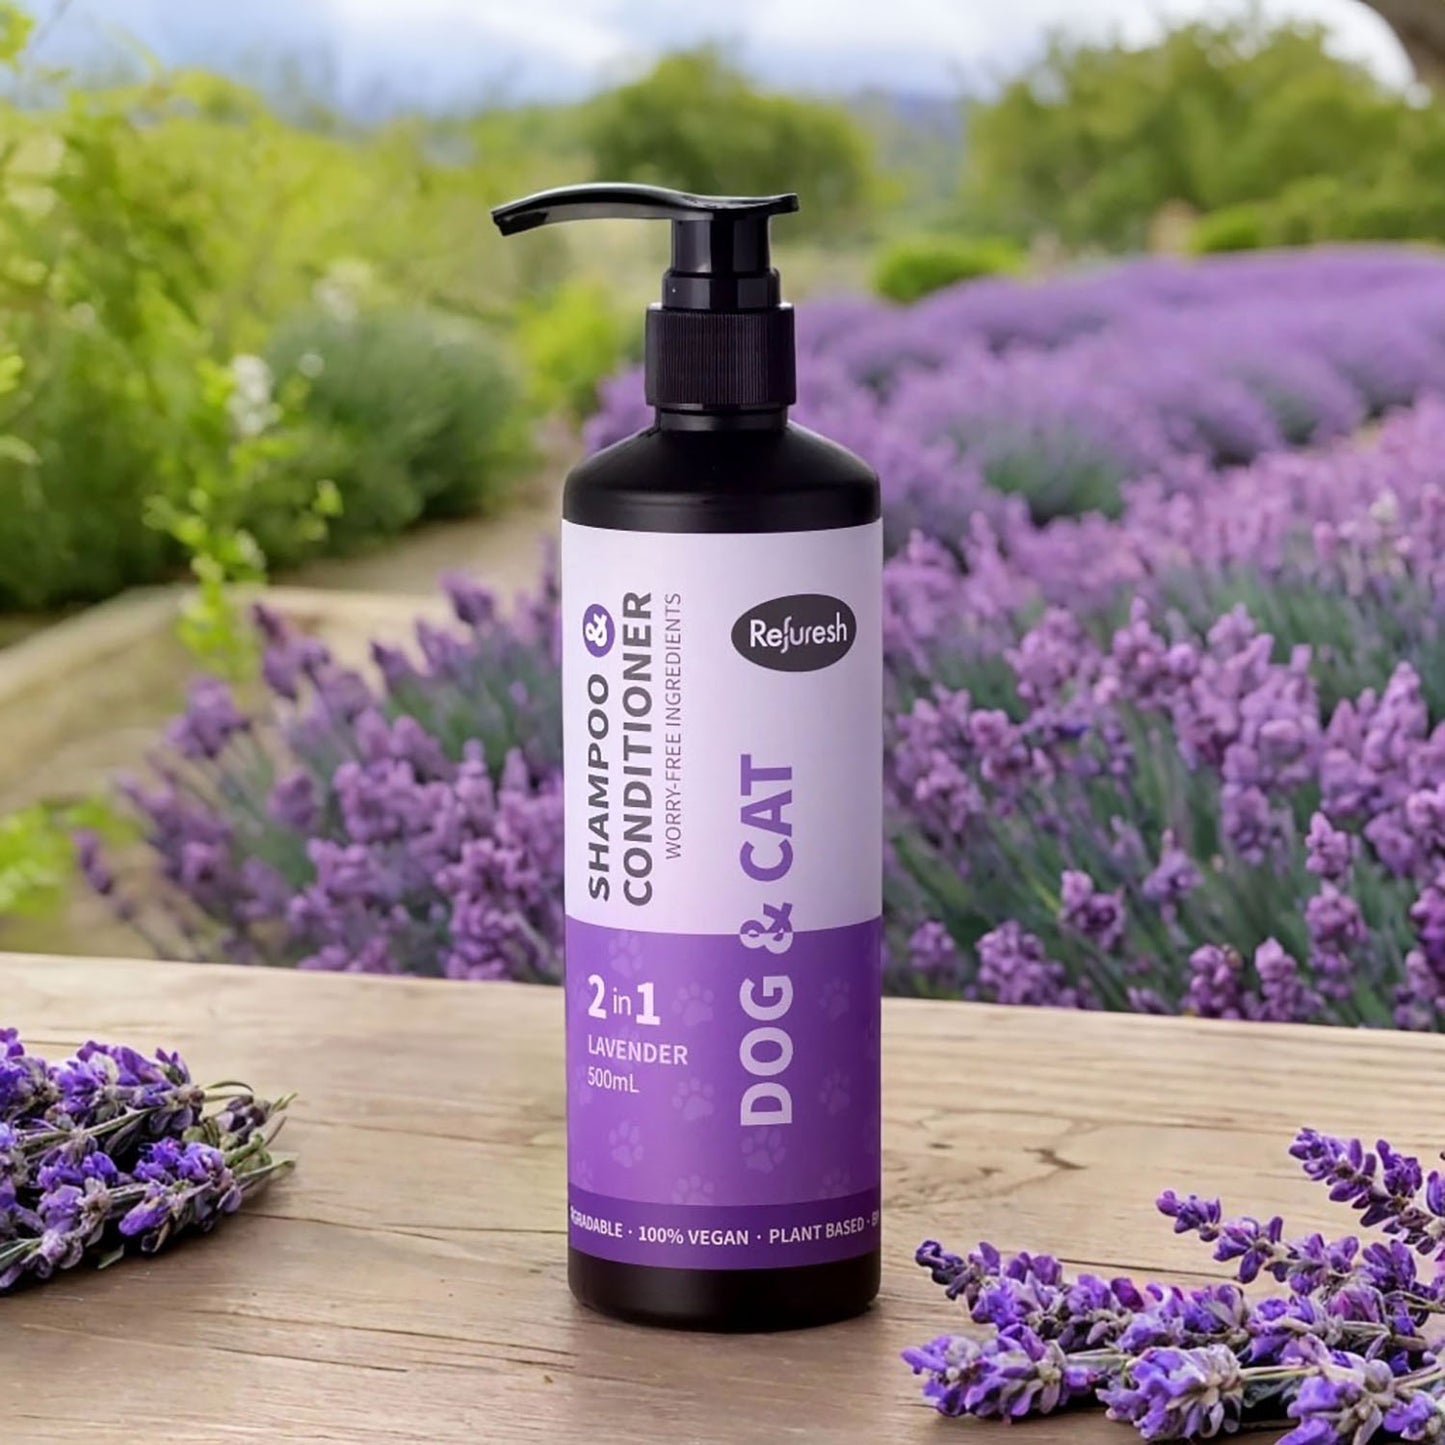 Lavender pet shampoo and conditioner